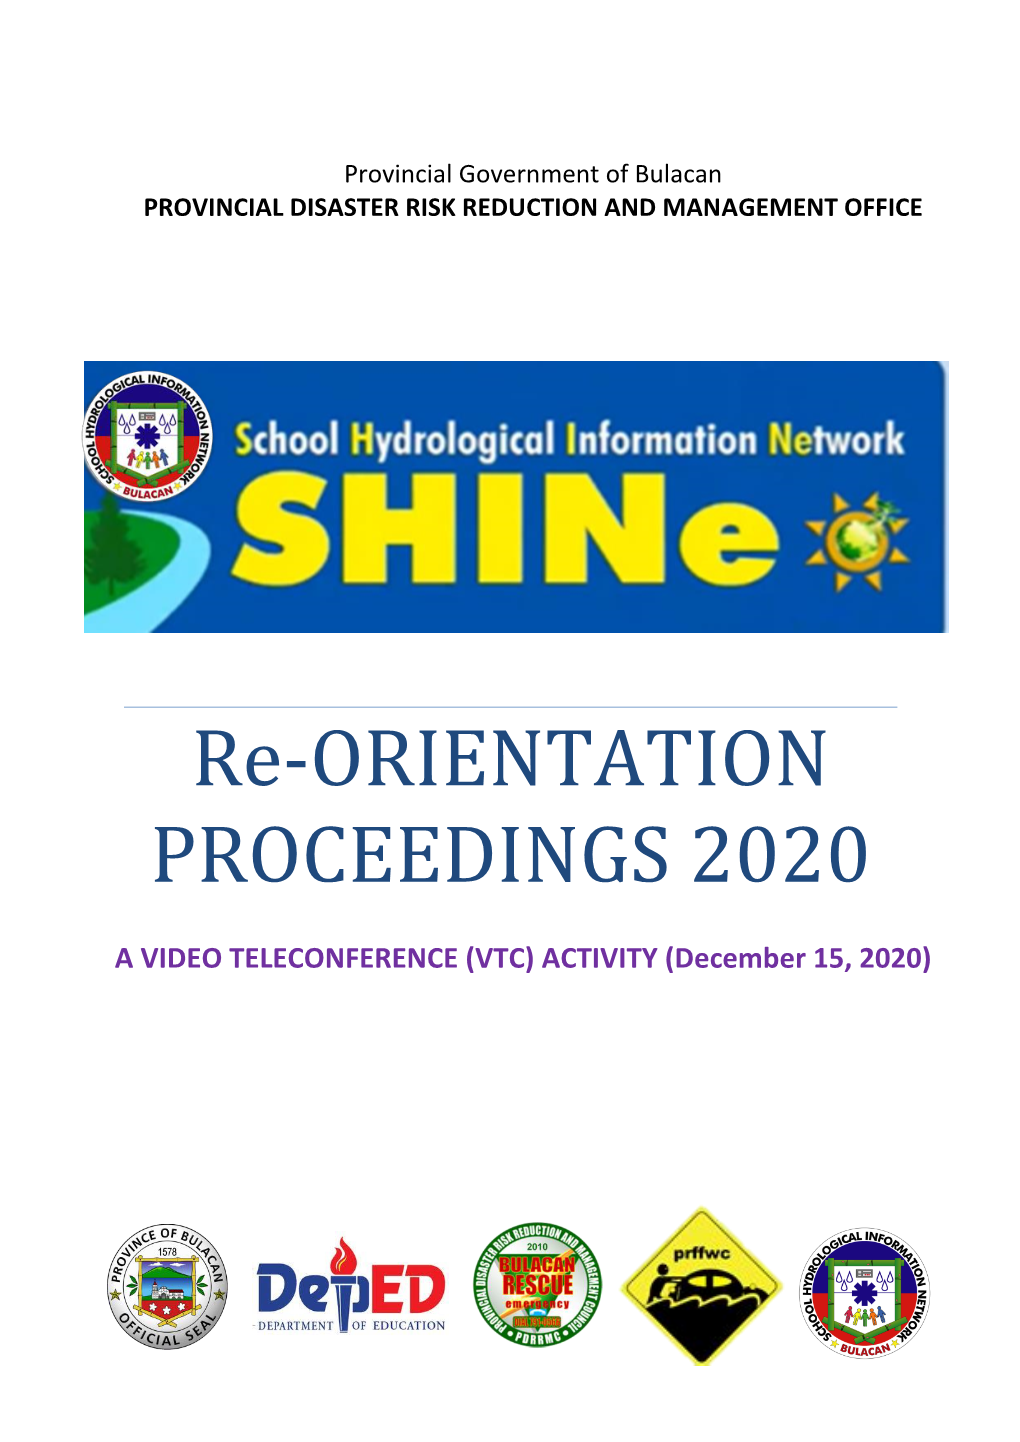 School Hydrological Information Network (Shine) 2020